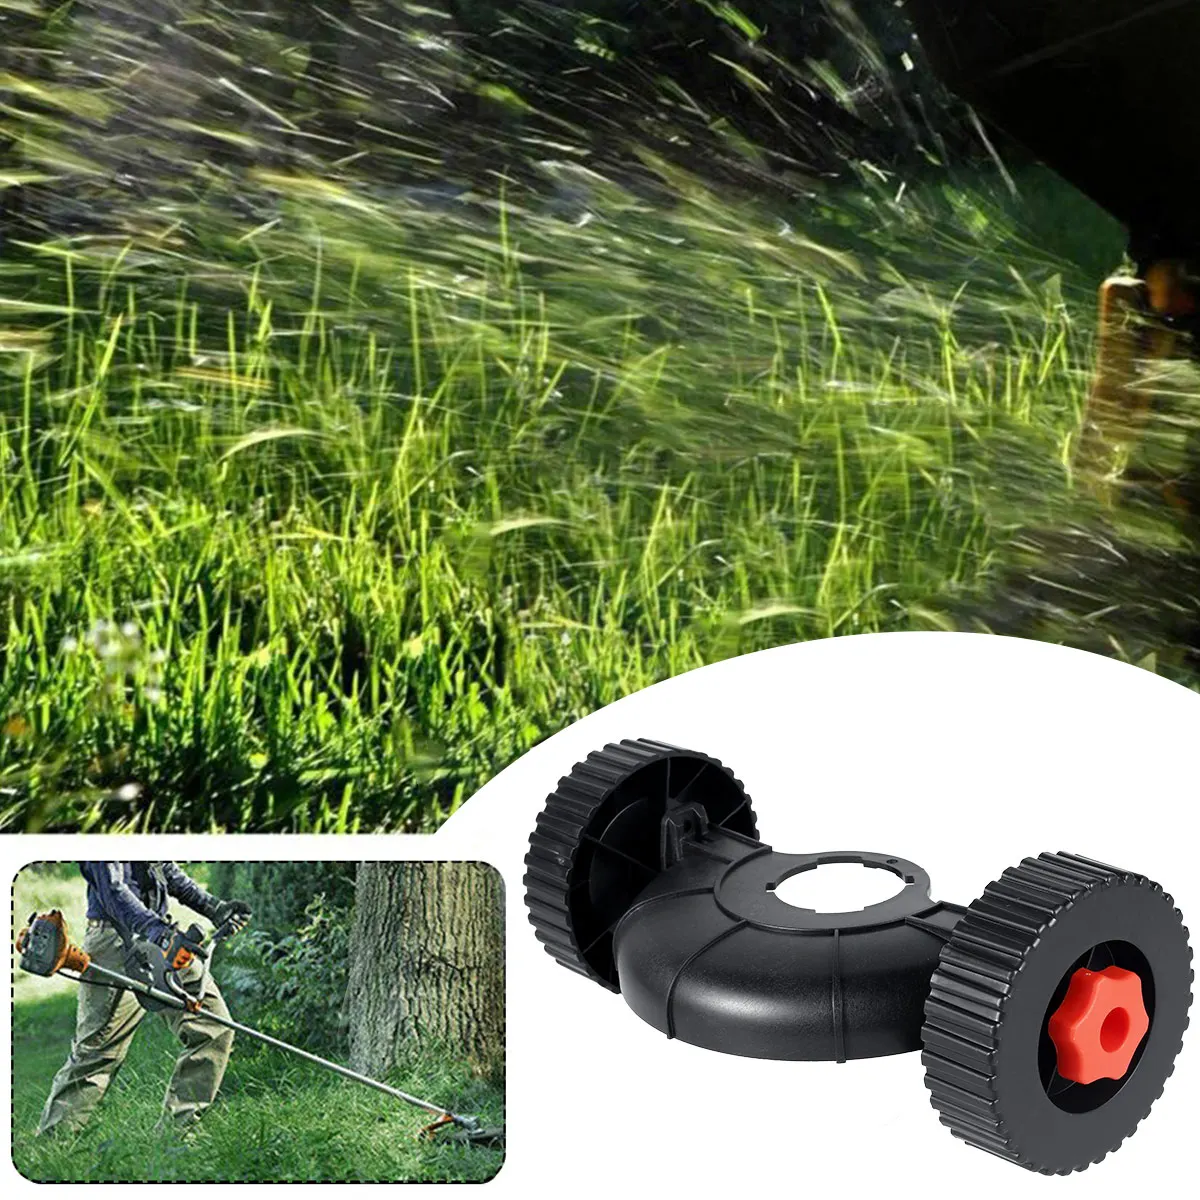 https://ae01.alicdn.com/kf/S3df4b3a1da434a76b9d2df04dbed18d2j/Support-Wheel-Lawn-Mower-Accessories-Flexible-Quick-Change-Adjustable-Lawn-Trimmer-Head-Attachment-Detachable-Auxiliary-Wheel.jpg